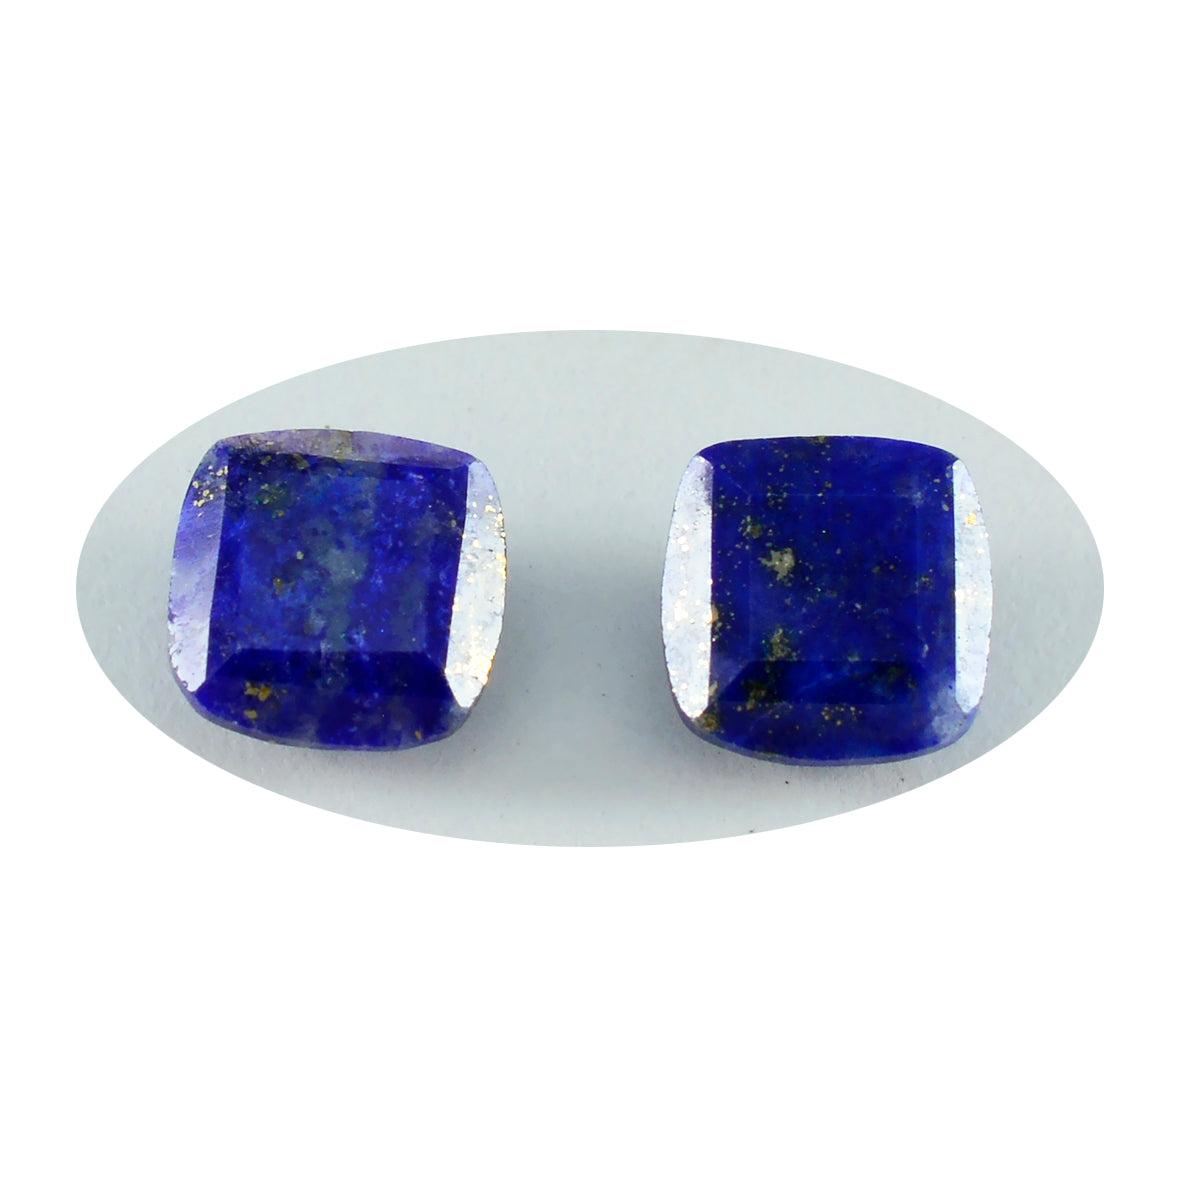 Riyogems 1PC Genuine Blue Lapis Lazuli Faceted 12x12 mm Cushion Shape A+ Quality Loose Gem